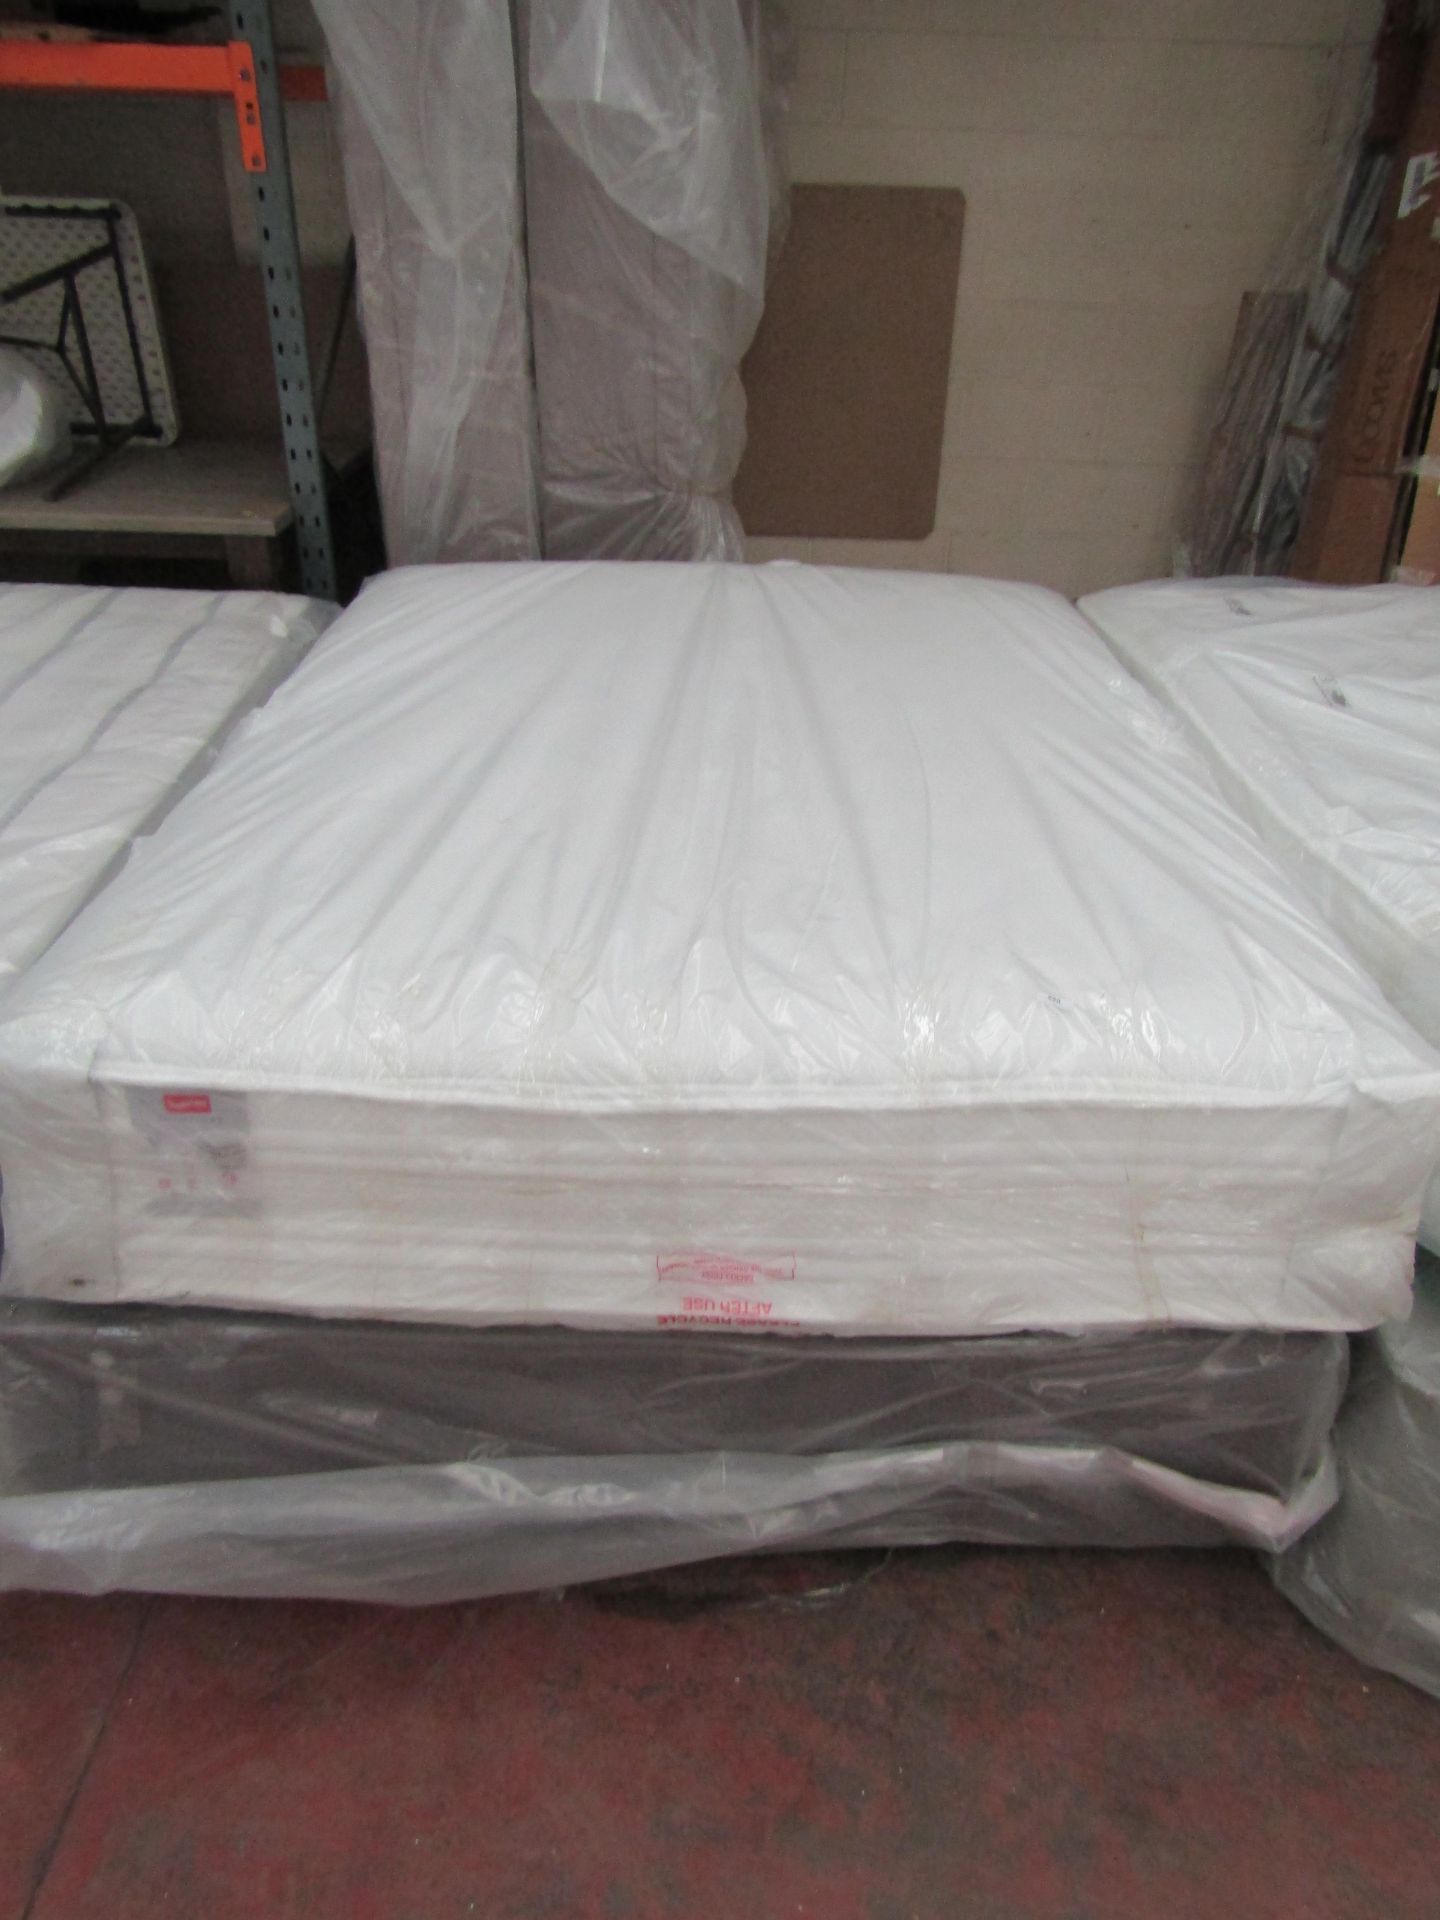 Slumberland Kingsize mattress with divan base, ex-display so item may contain a few marks etc.